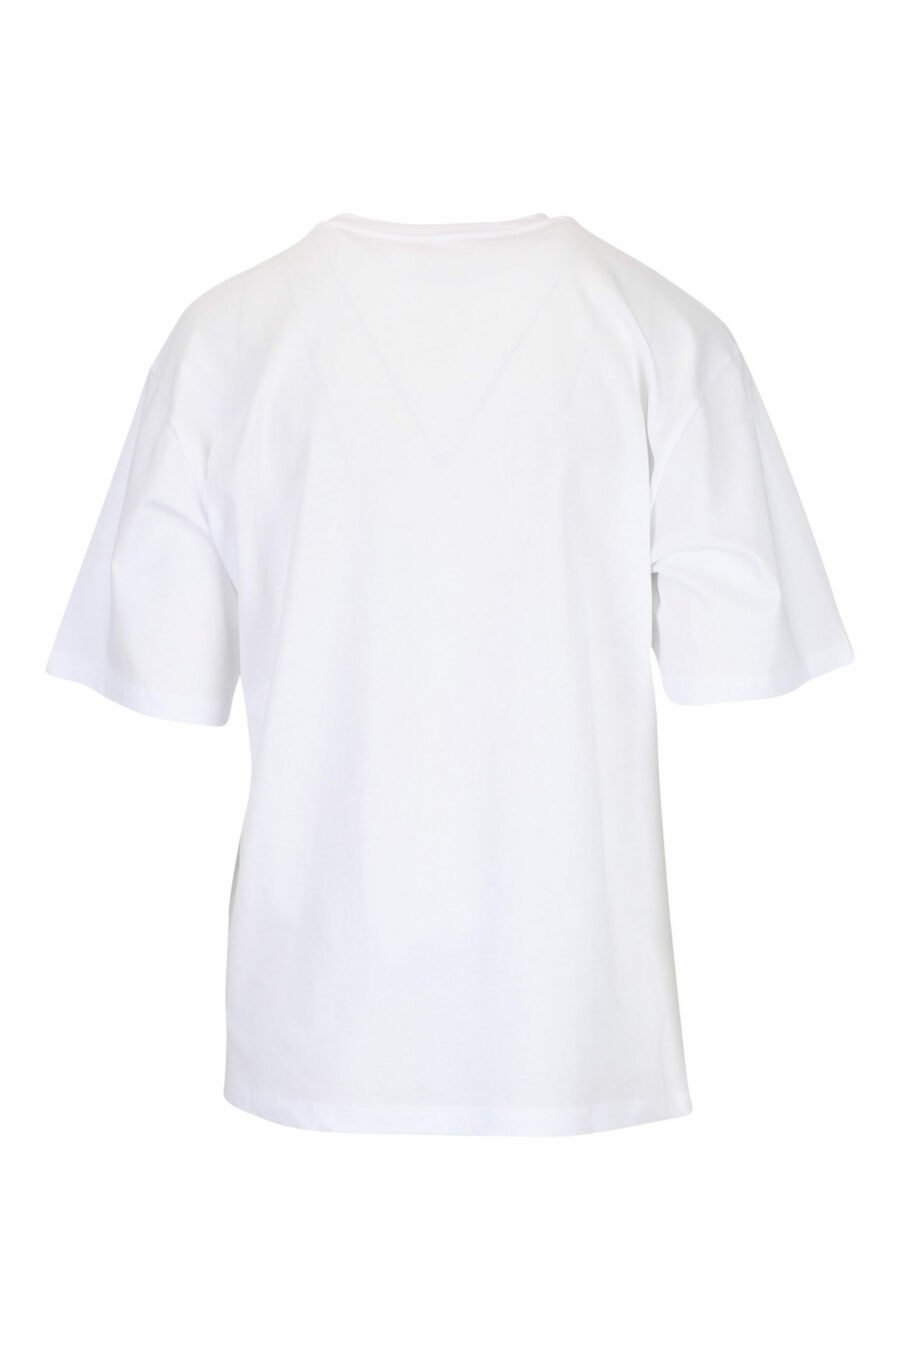 T-shirt blanc avec impression optique - 8054943308046 1 scaled